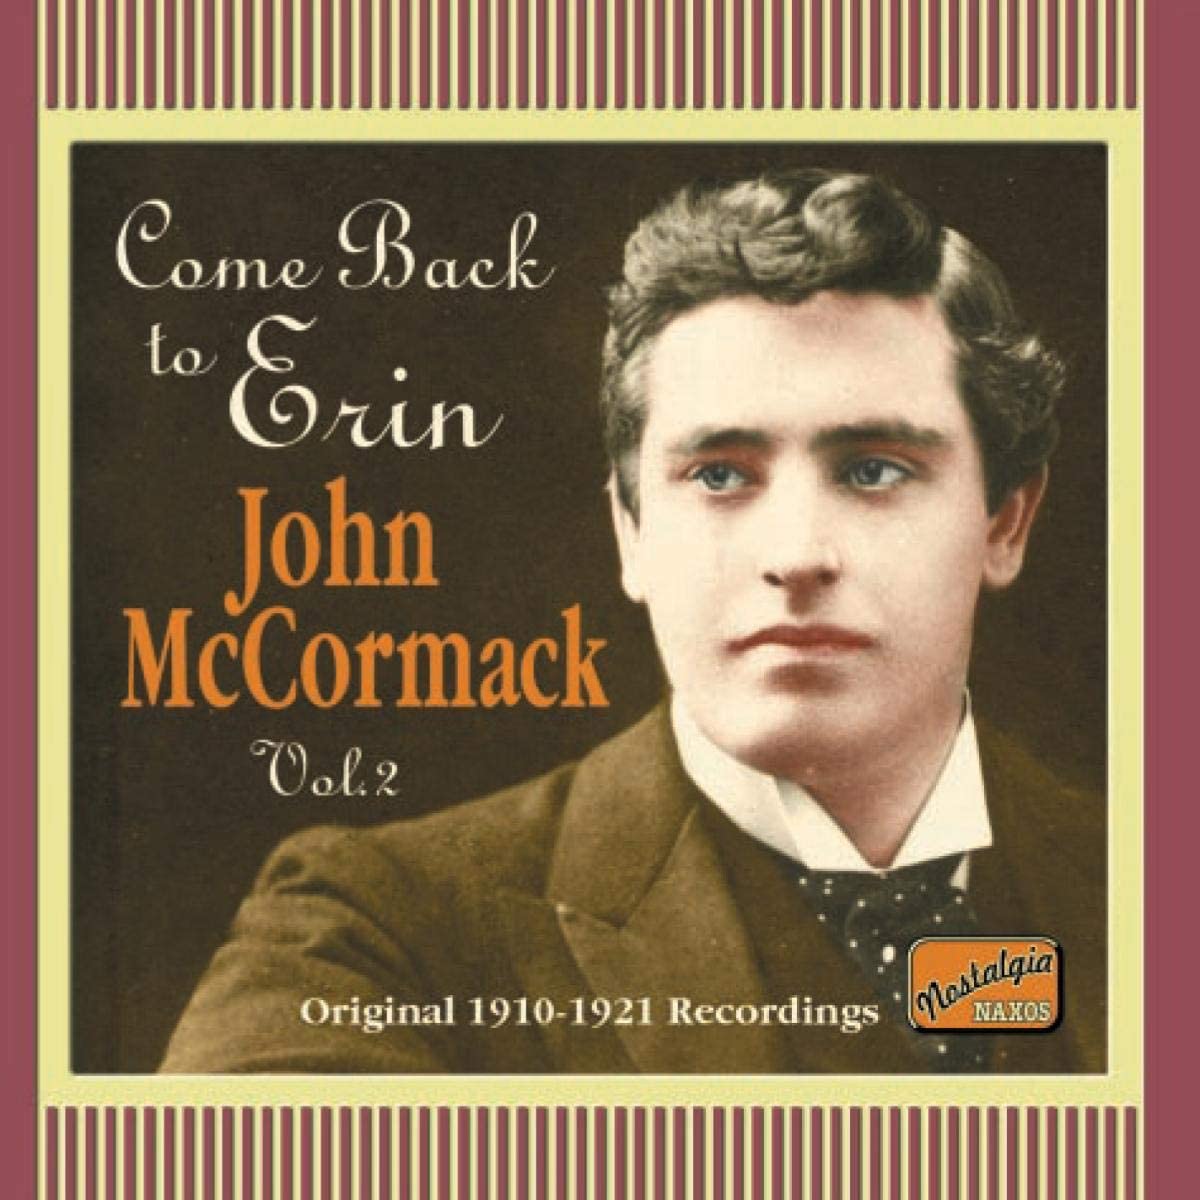 John McCormack: Come Back To Erinvol. 2